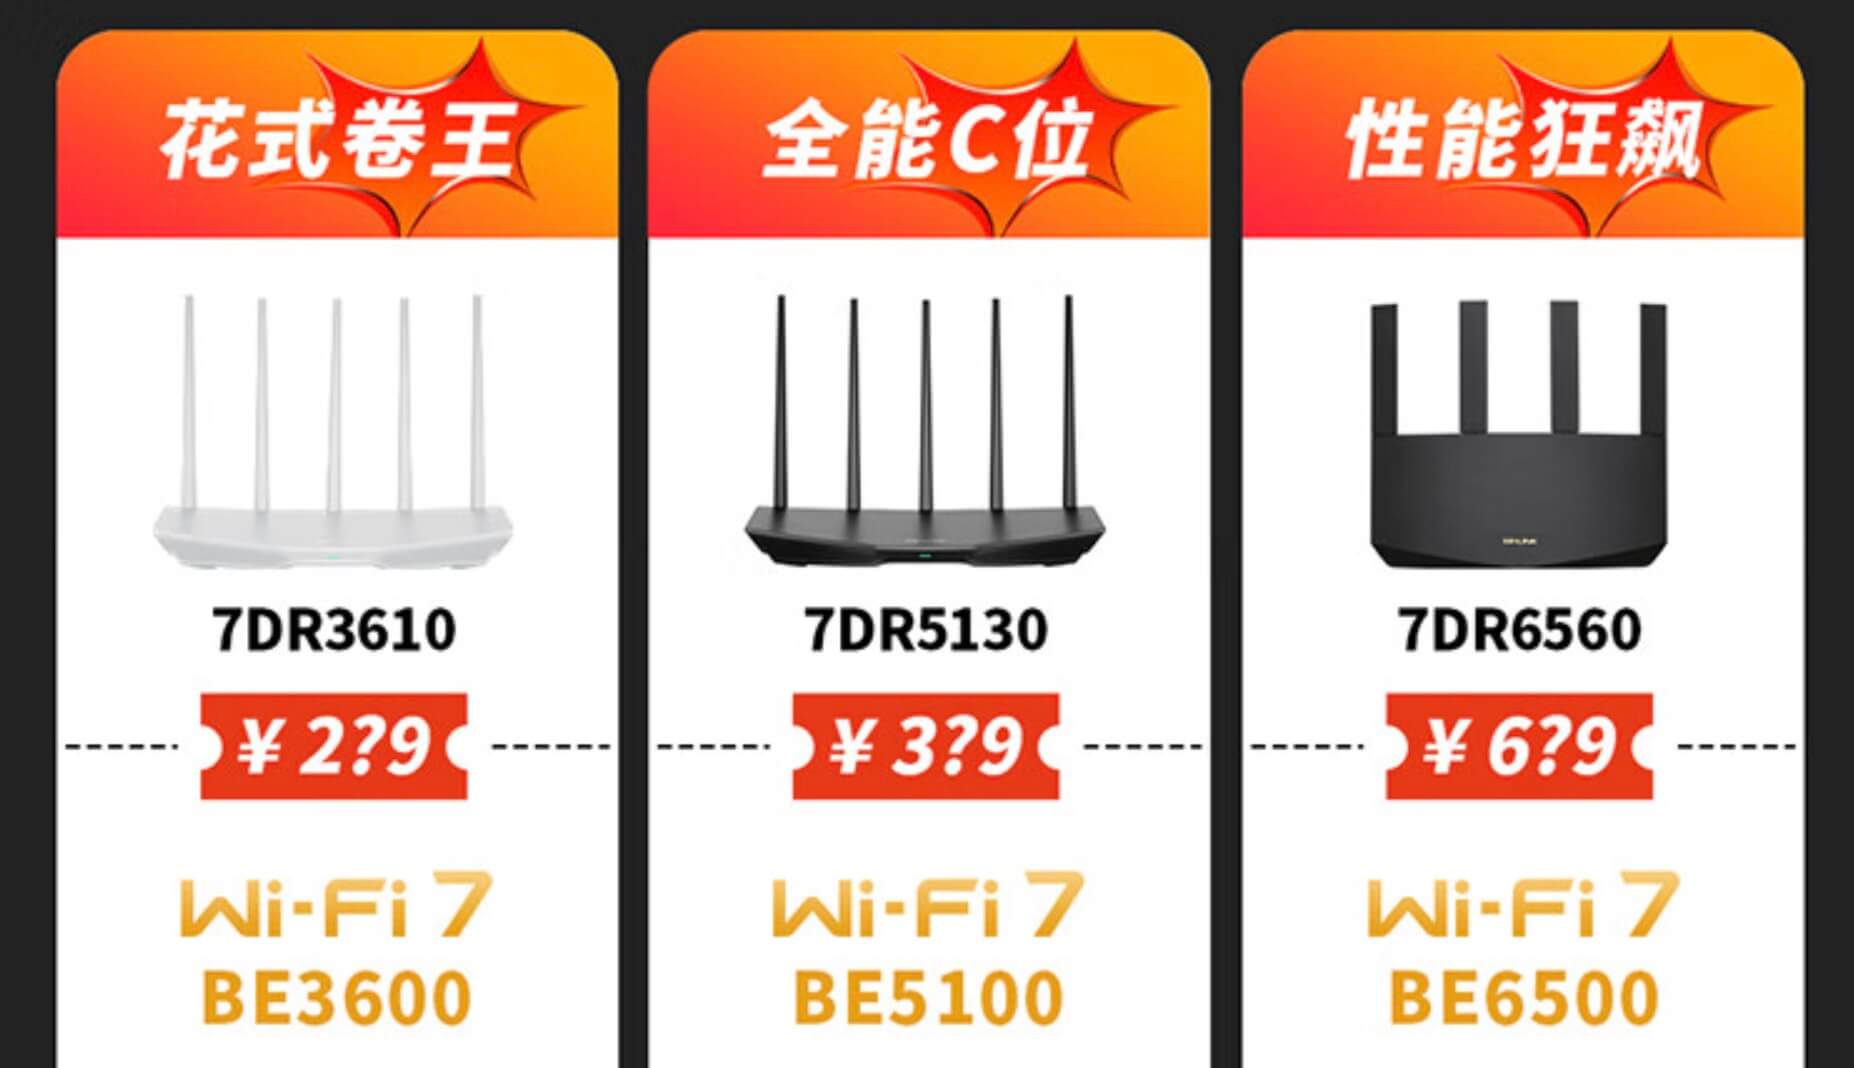 TP-LINK 上架三款WiFi7路由器 BE3600 BE5100 BE6500-图片2